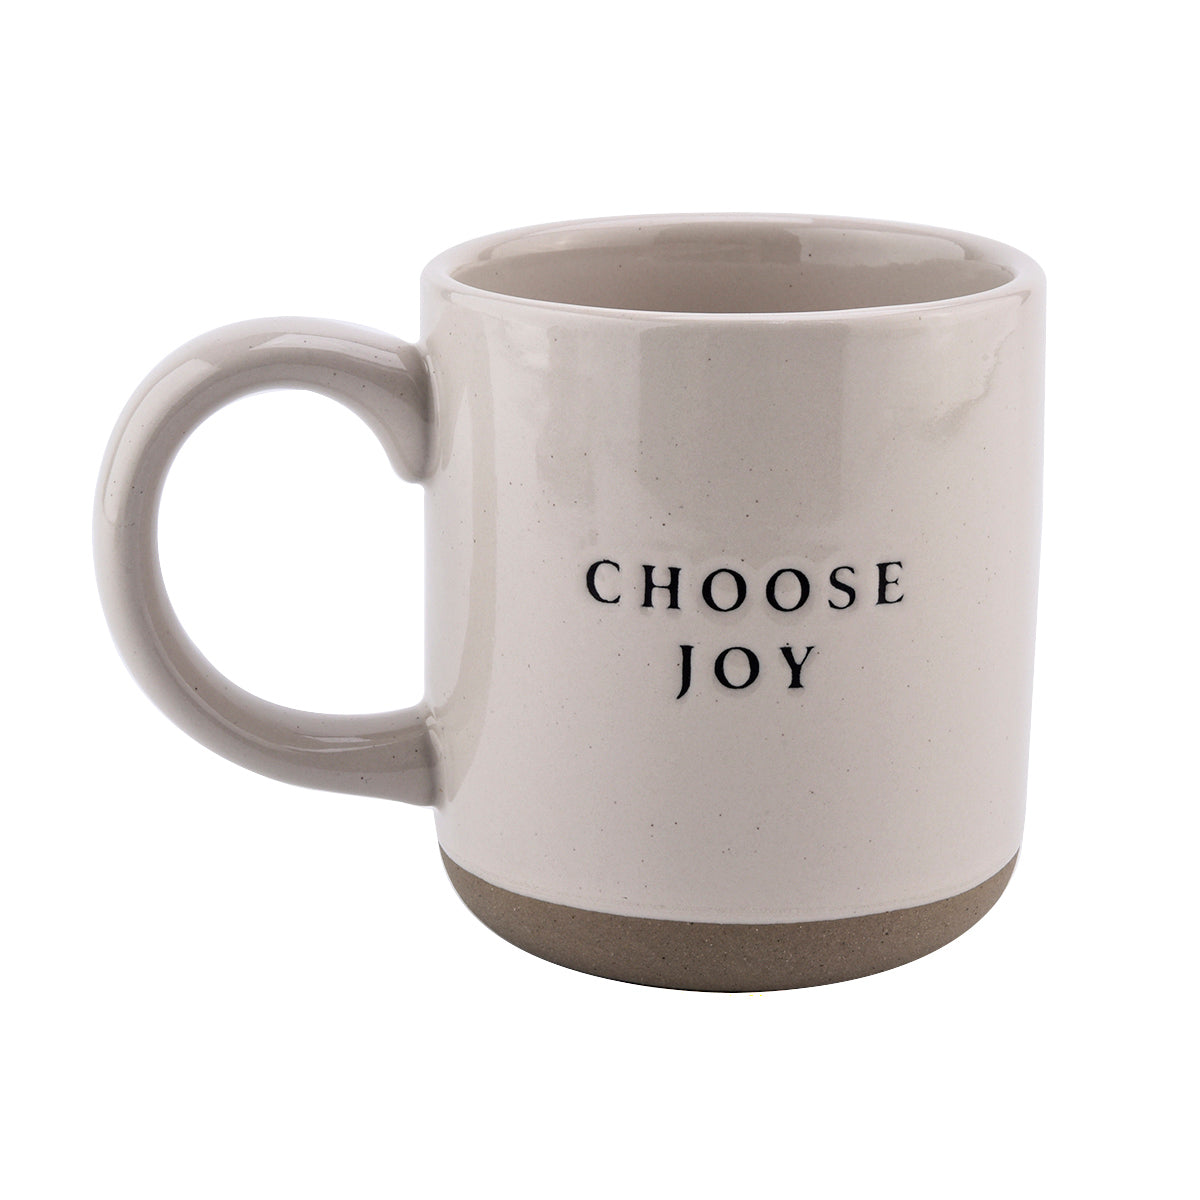 Choose Joy - Cream Stoneware Coffee Mug - 14 oz